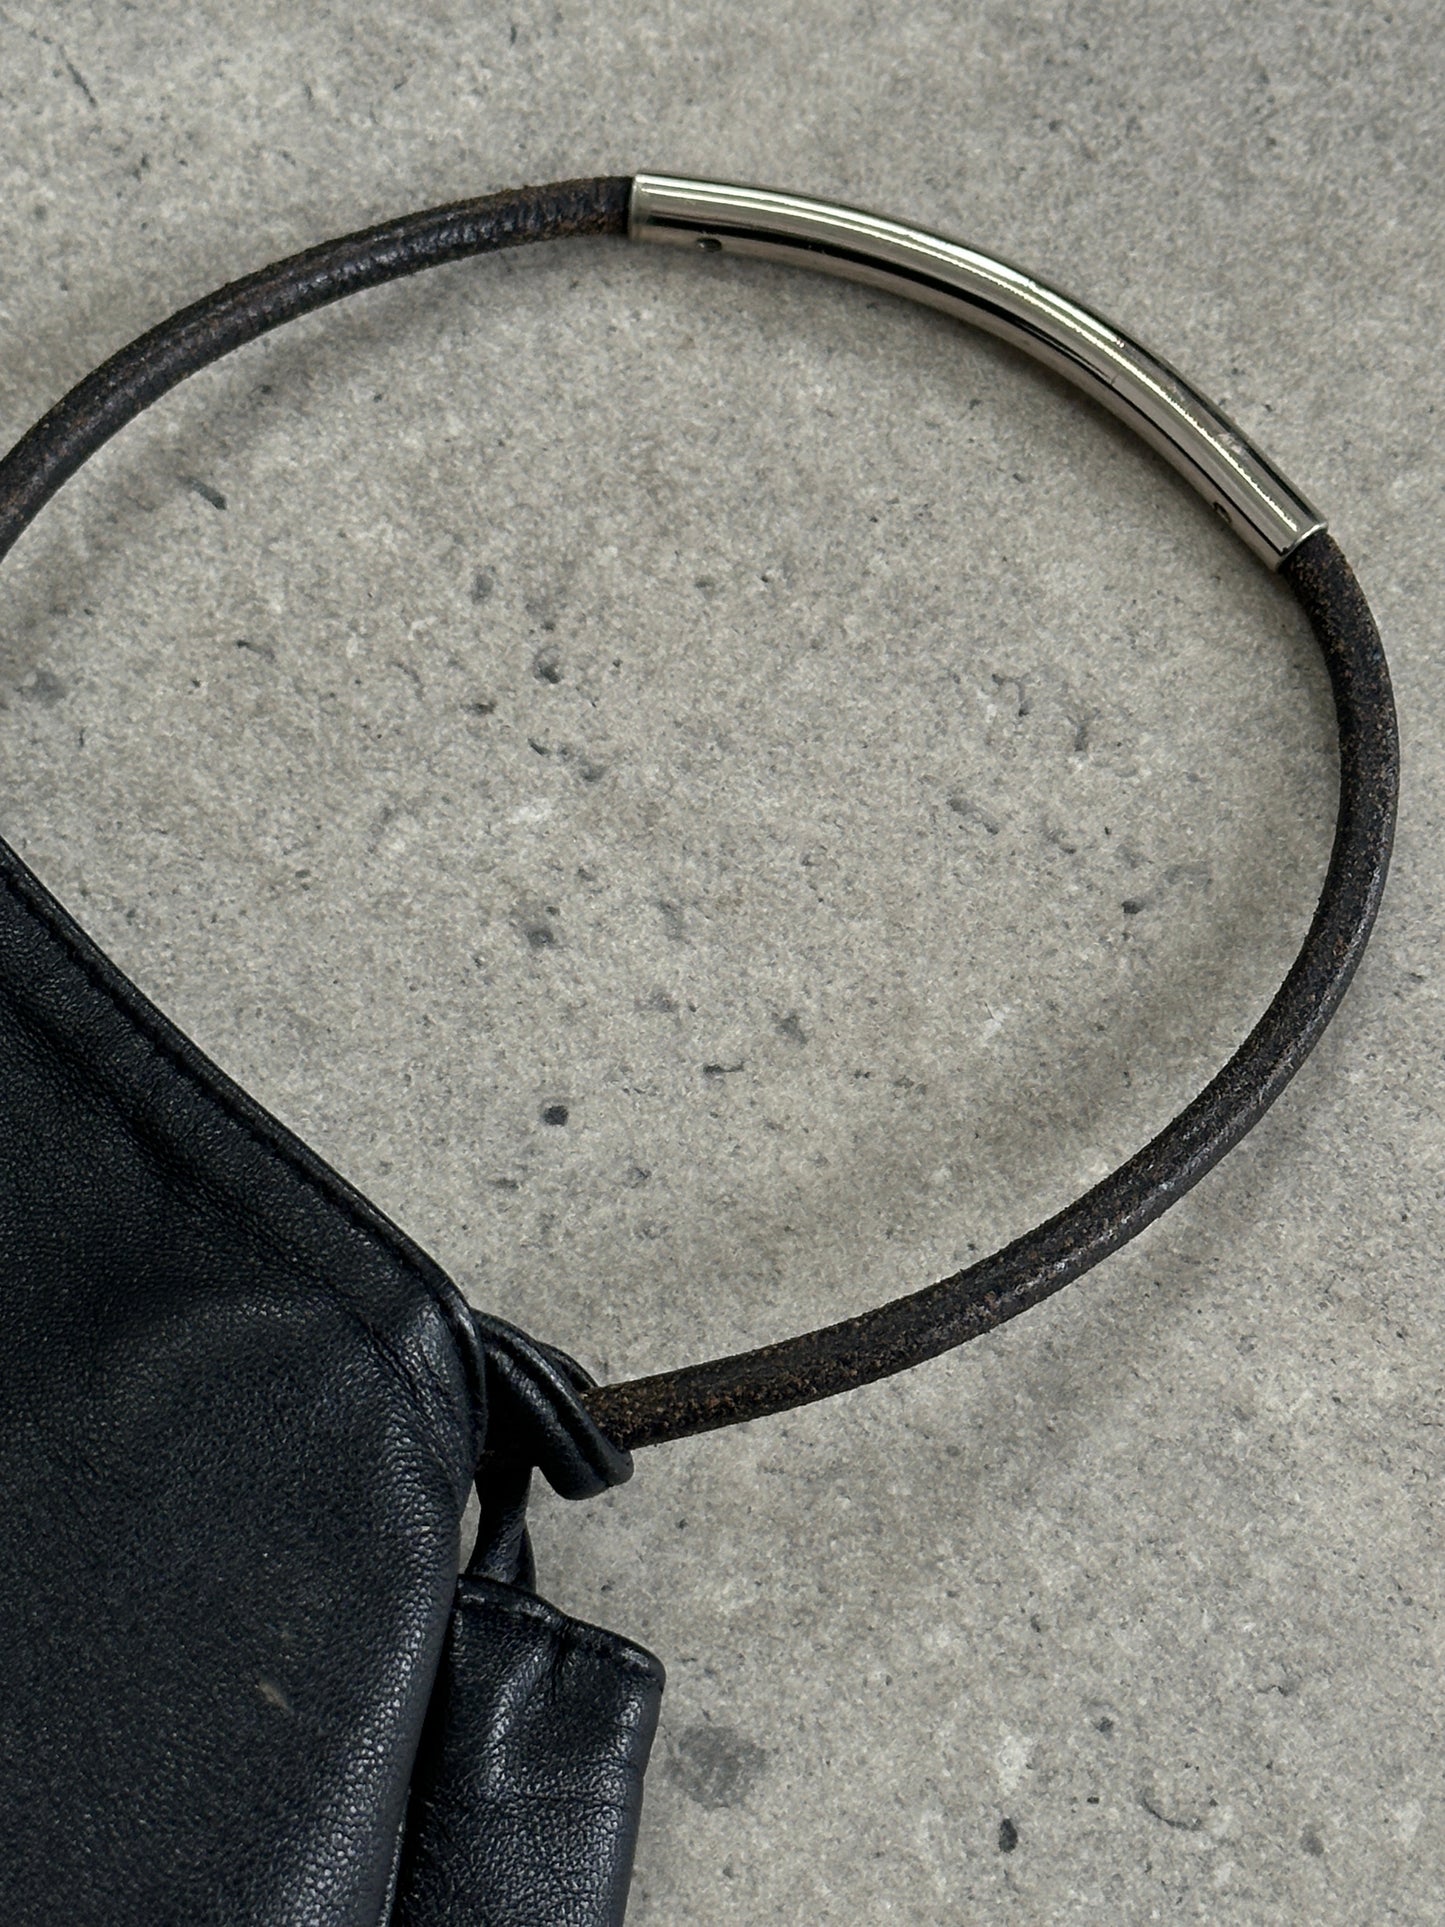 DKNY Soft Leather Clutch Bag